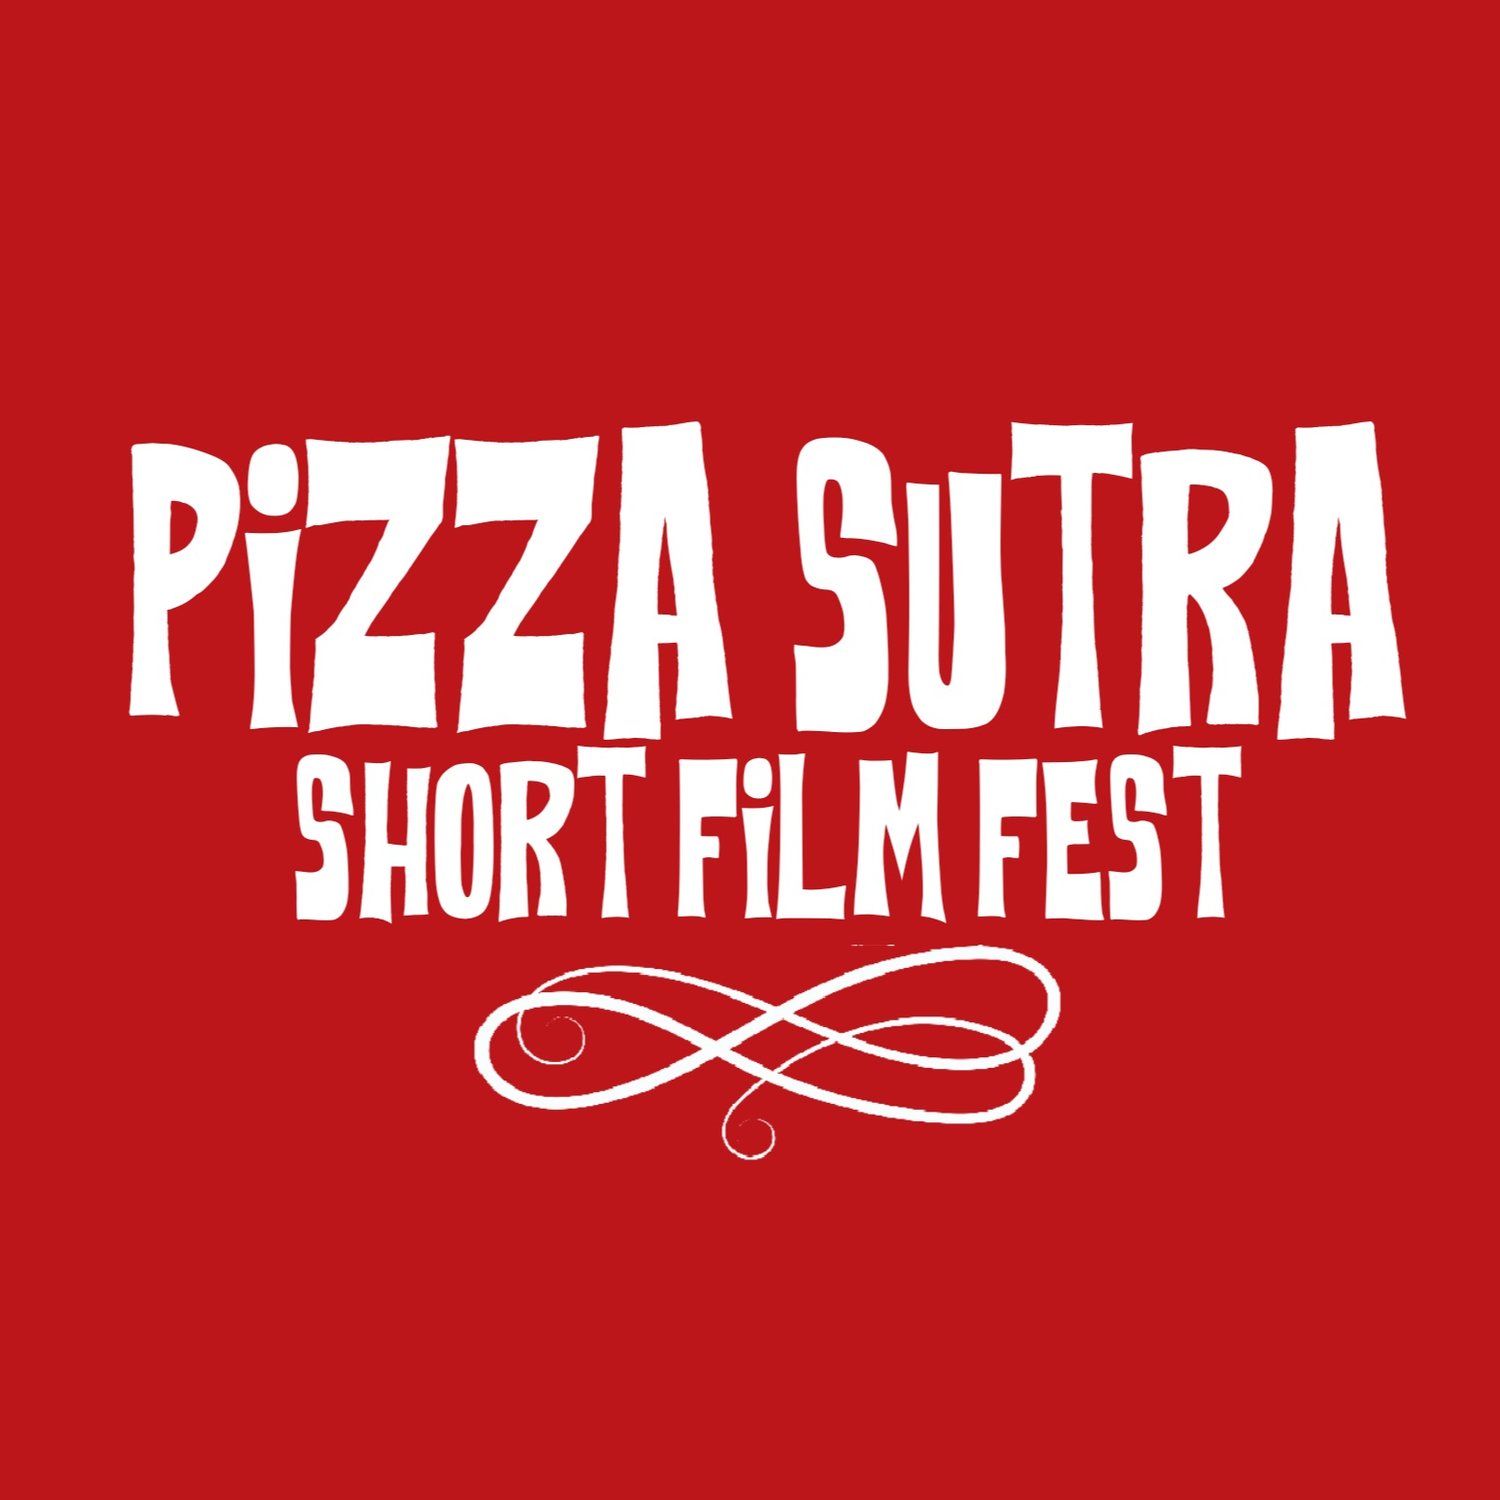 PIZZA SUTRA FILM FEST